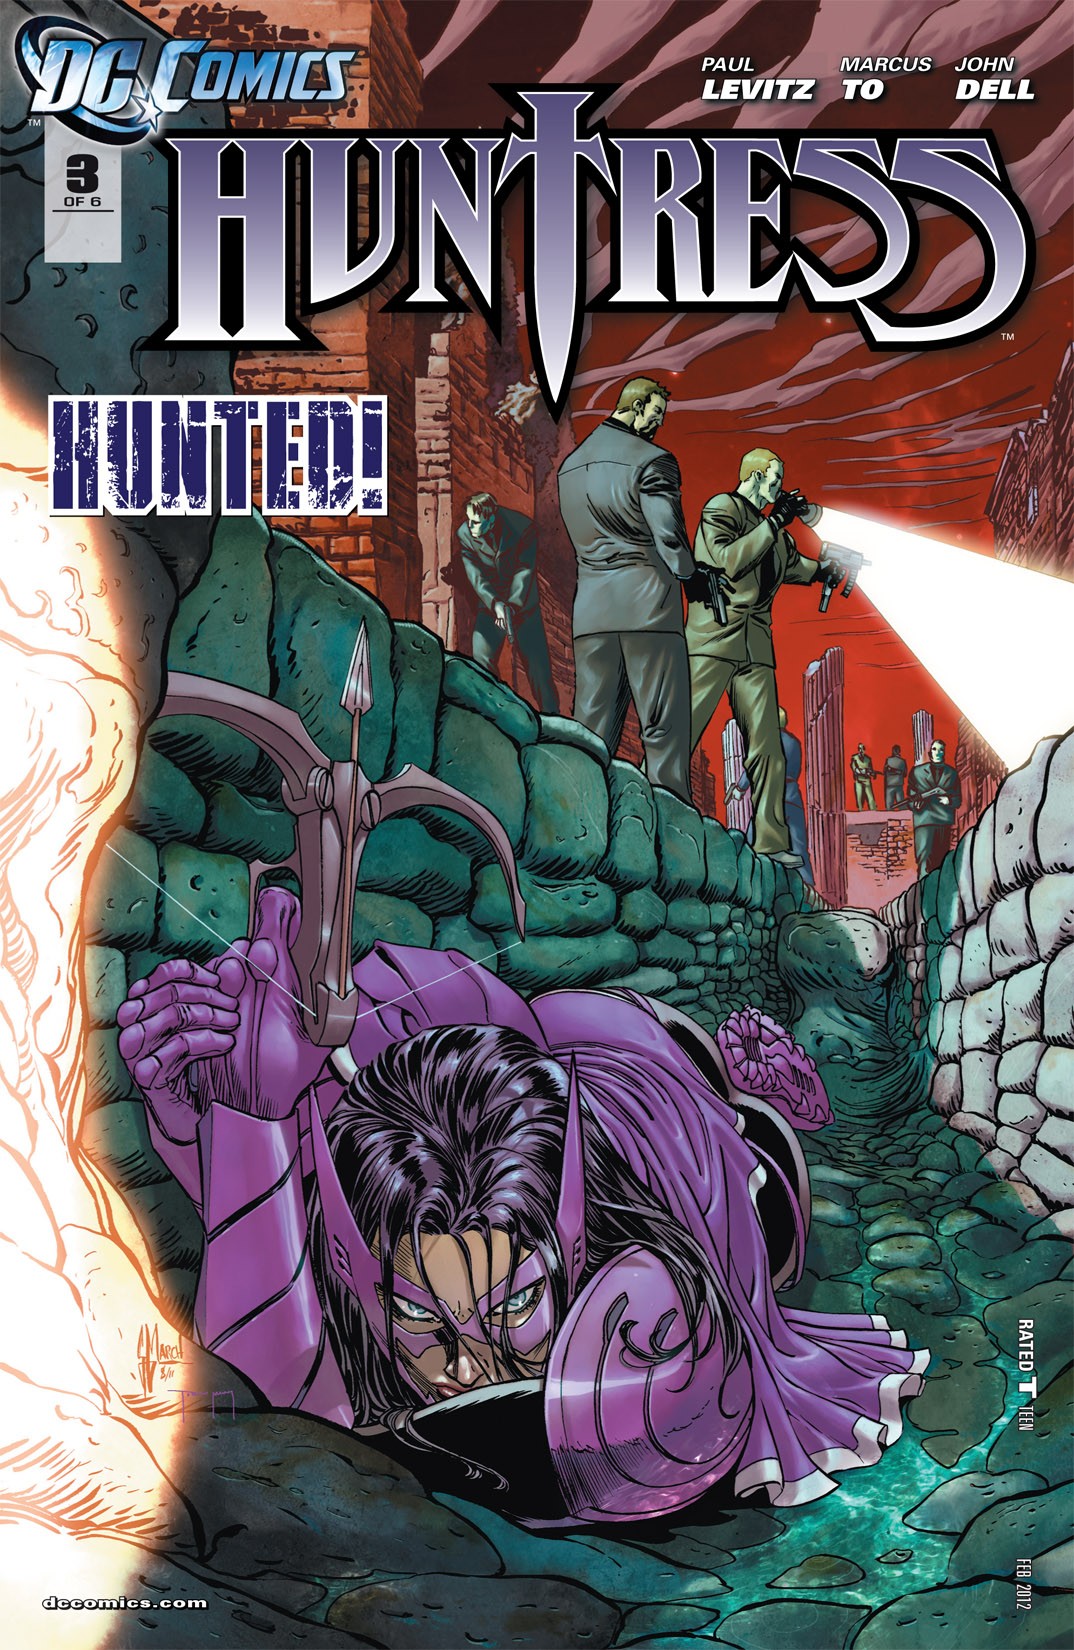 Huntress Vol. 3 #3